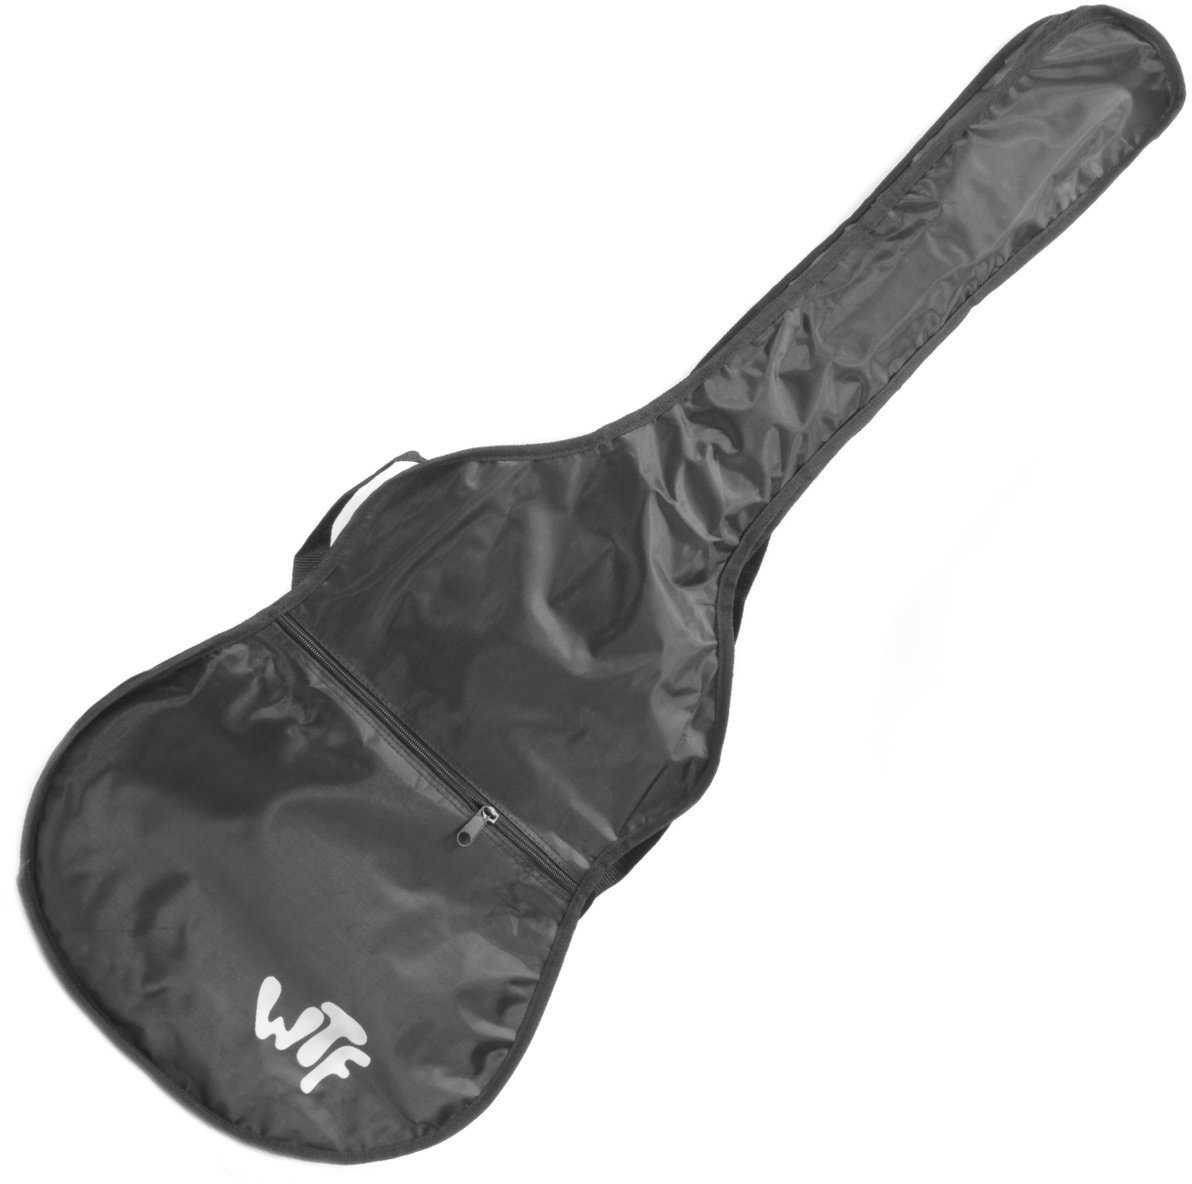 Hoes voor klassieke gitaar WTF CG00 Hoes voor klassieke gitaar Zwart